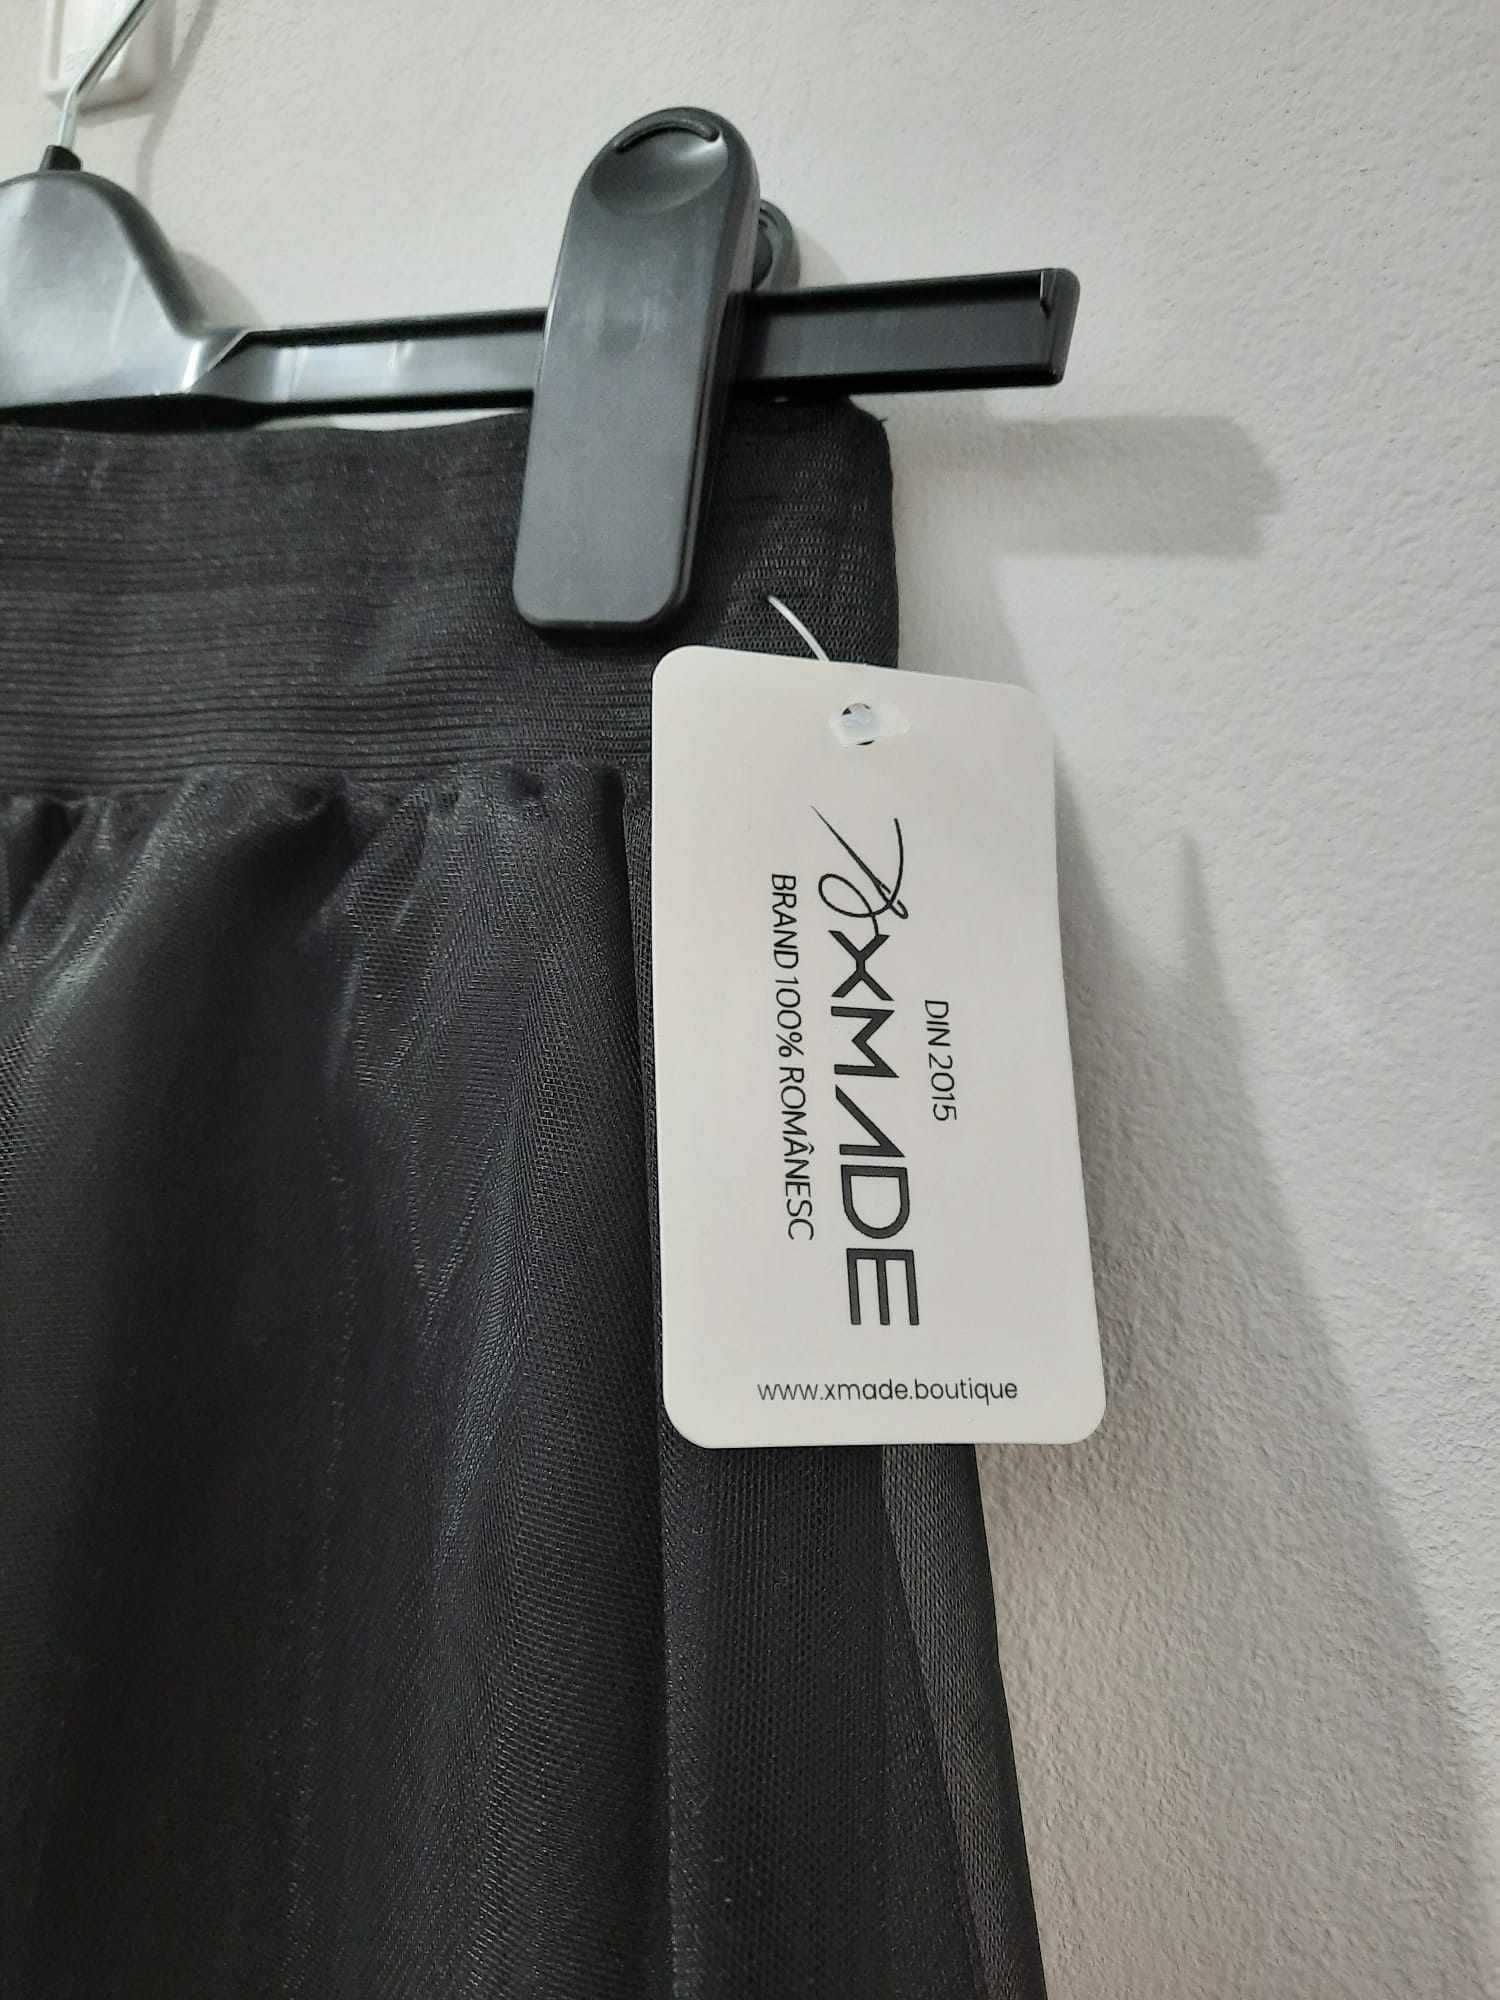 Fusta tulle neagra 55 cm lungime Xmade Boutique - Noua eticheta